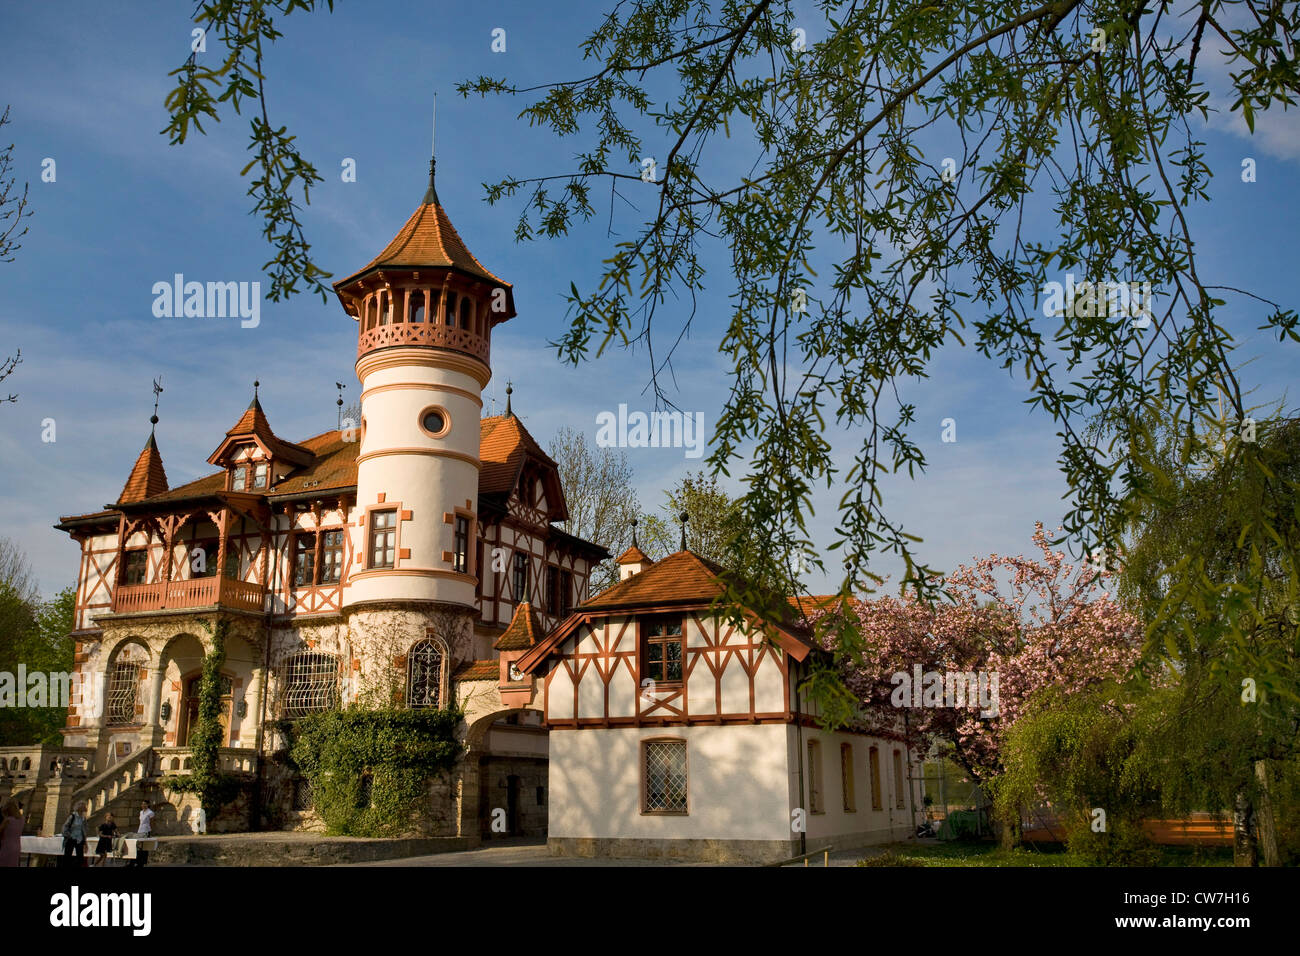 Petit château, Hersching à l'Ammersee (Lac Ammer), Allemagne, Bavière, Herrsching am Ammersee Banque D'Images